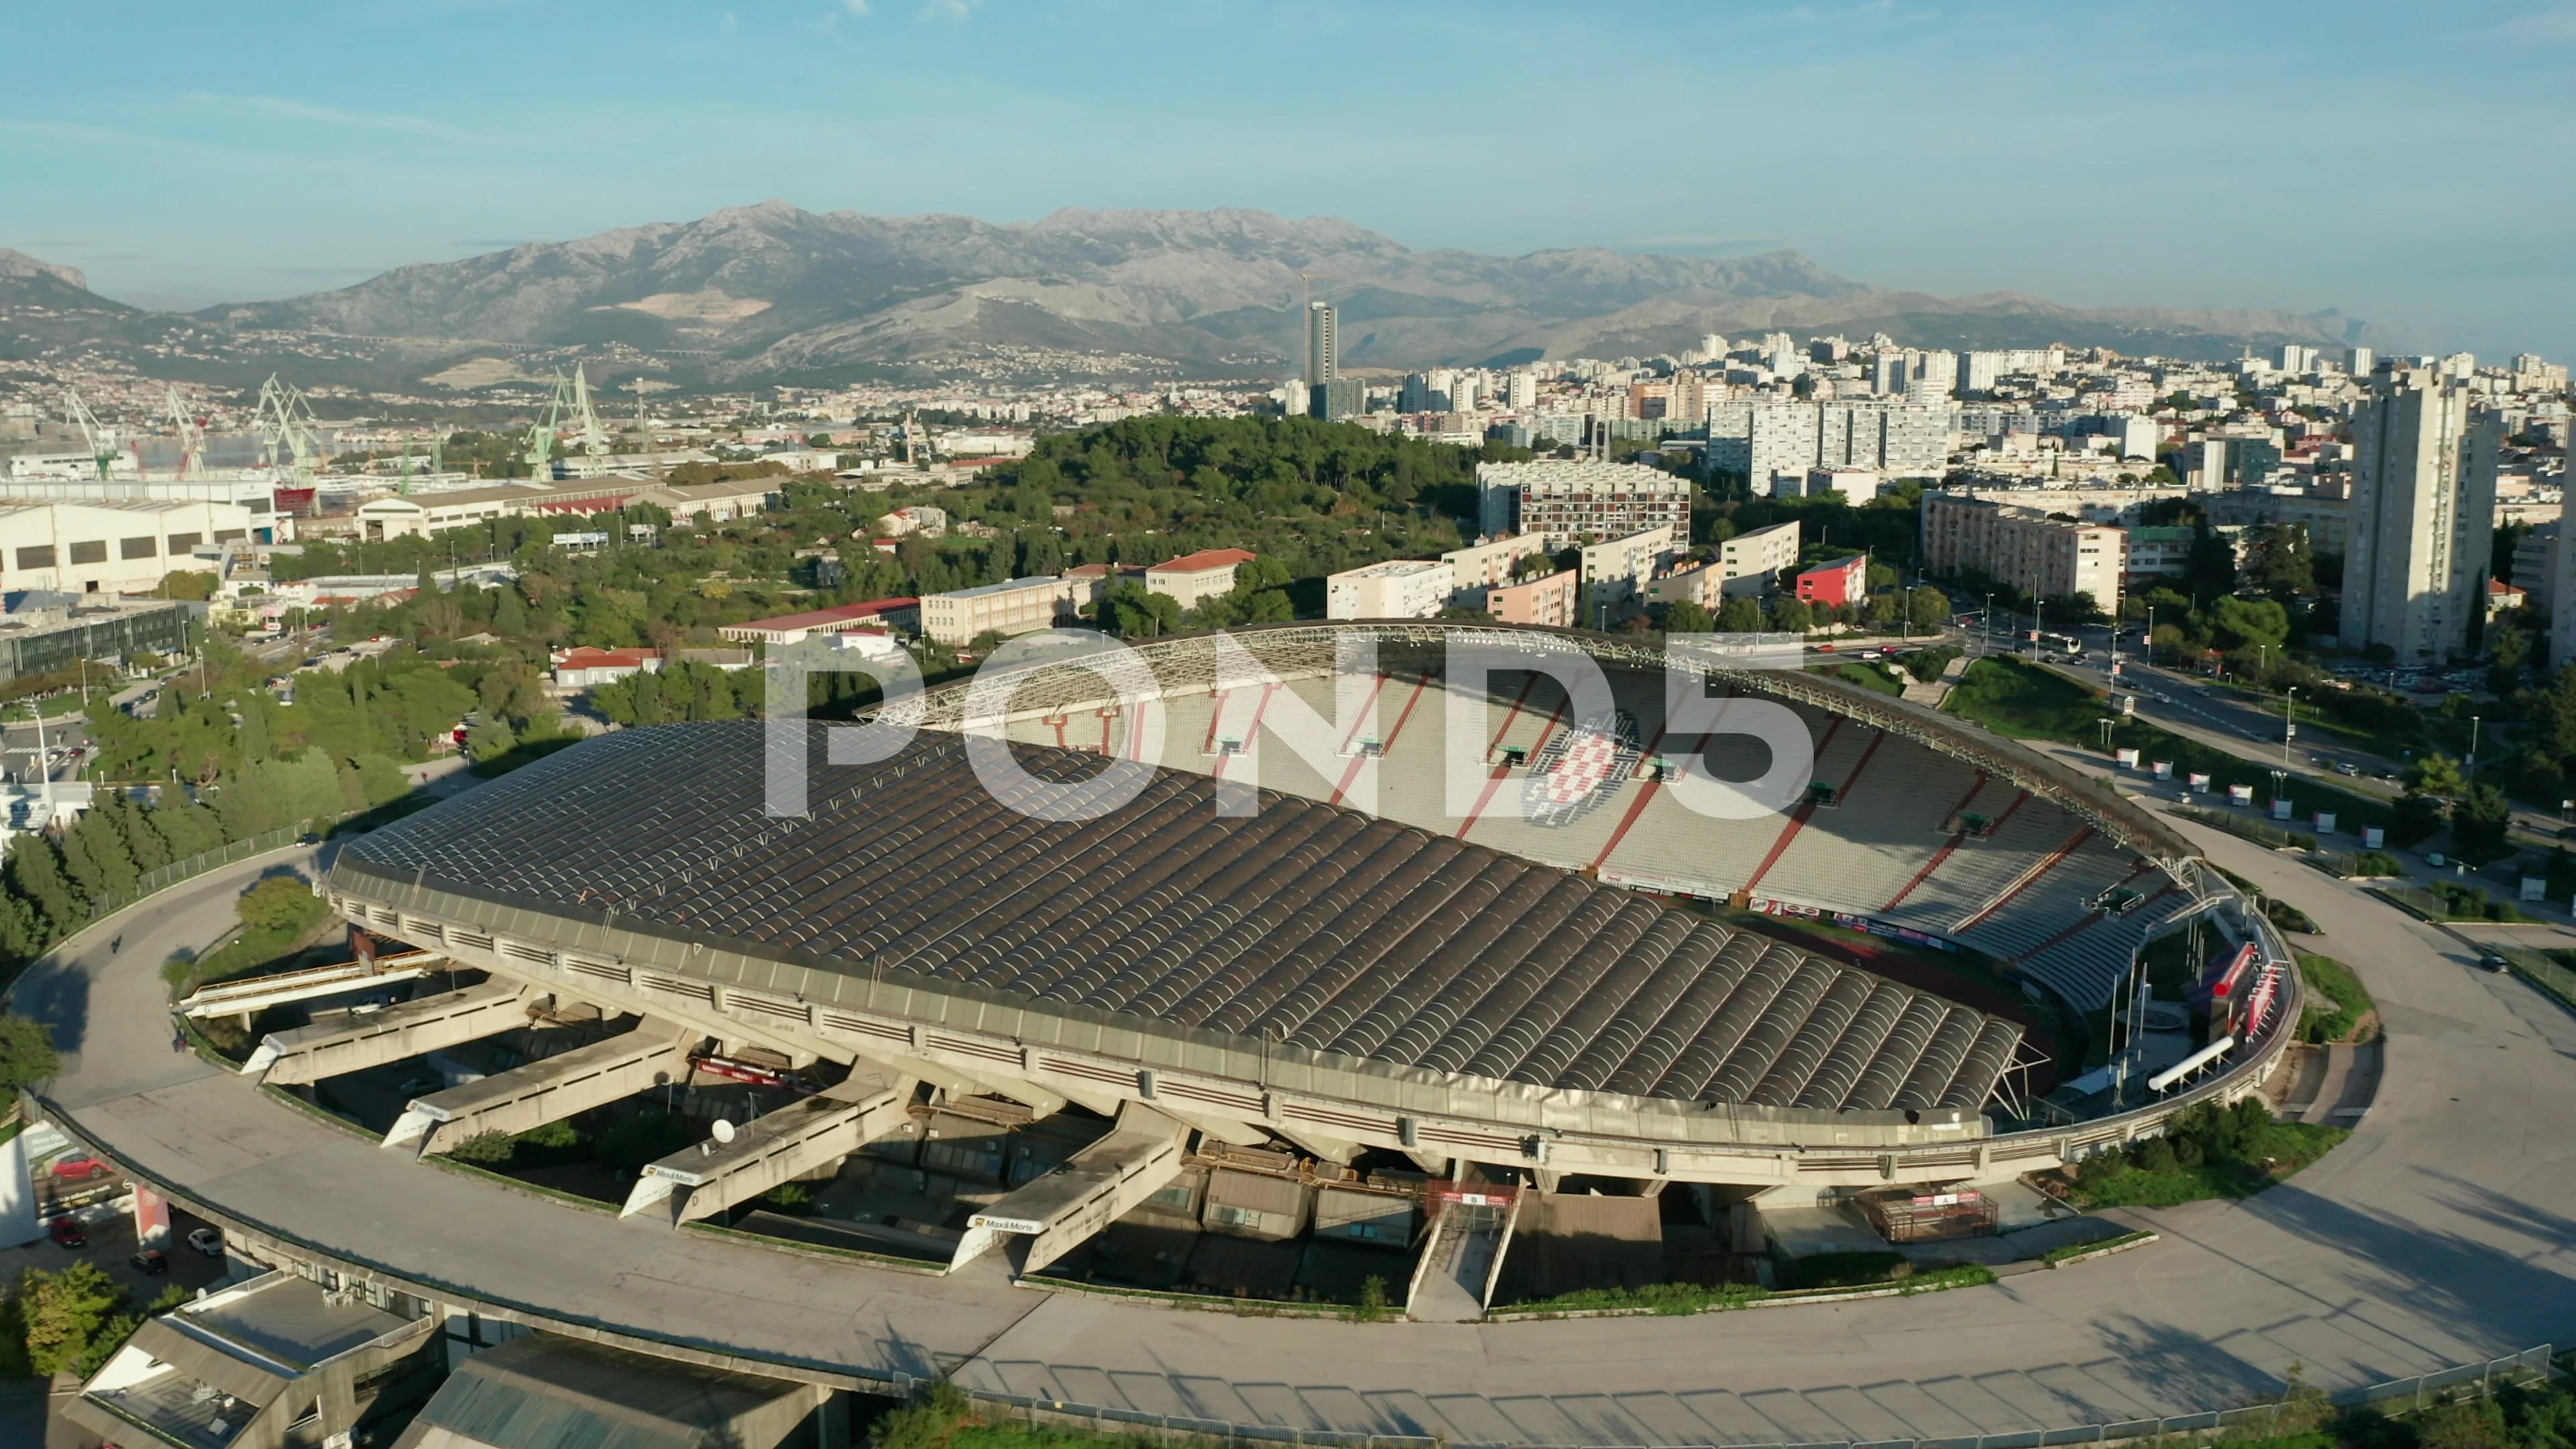 Poljud stadium split croatia hi-res stock photography and images